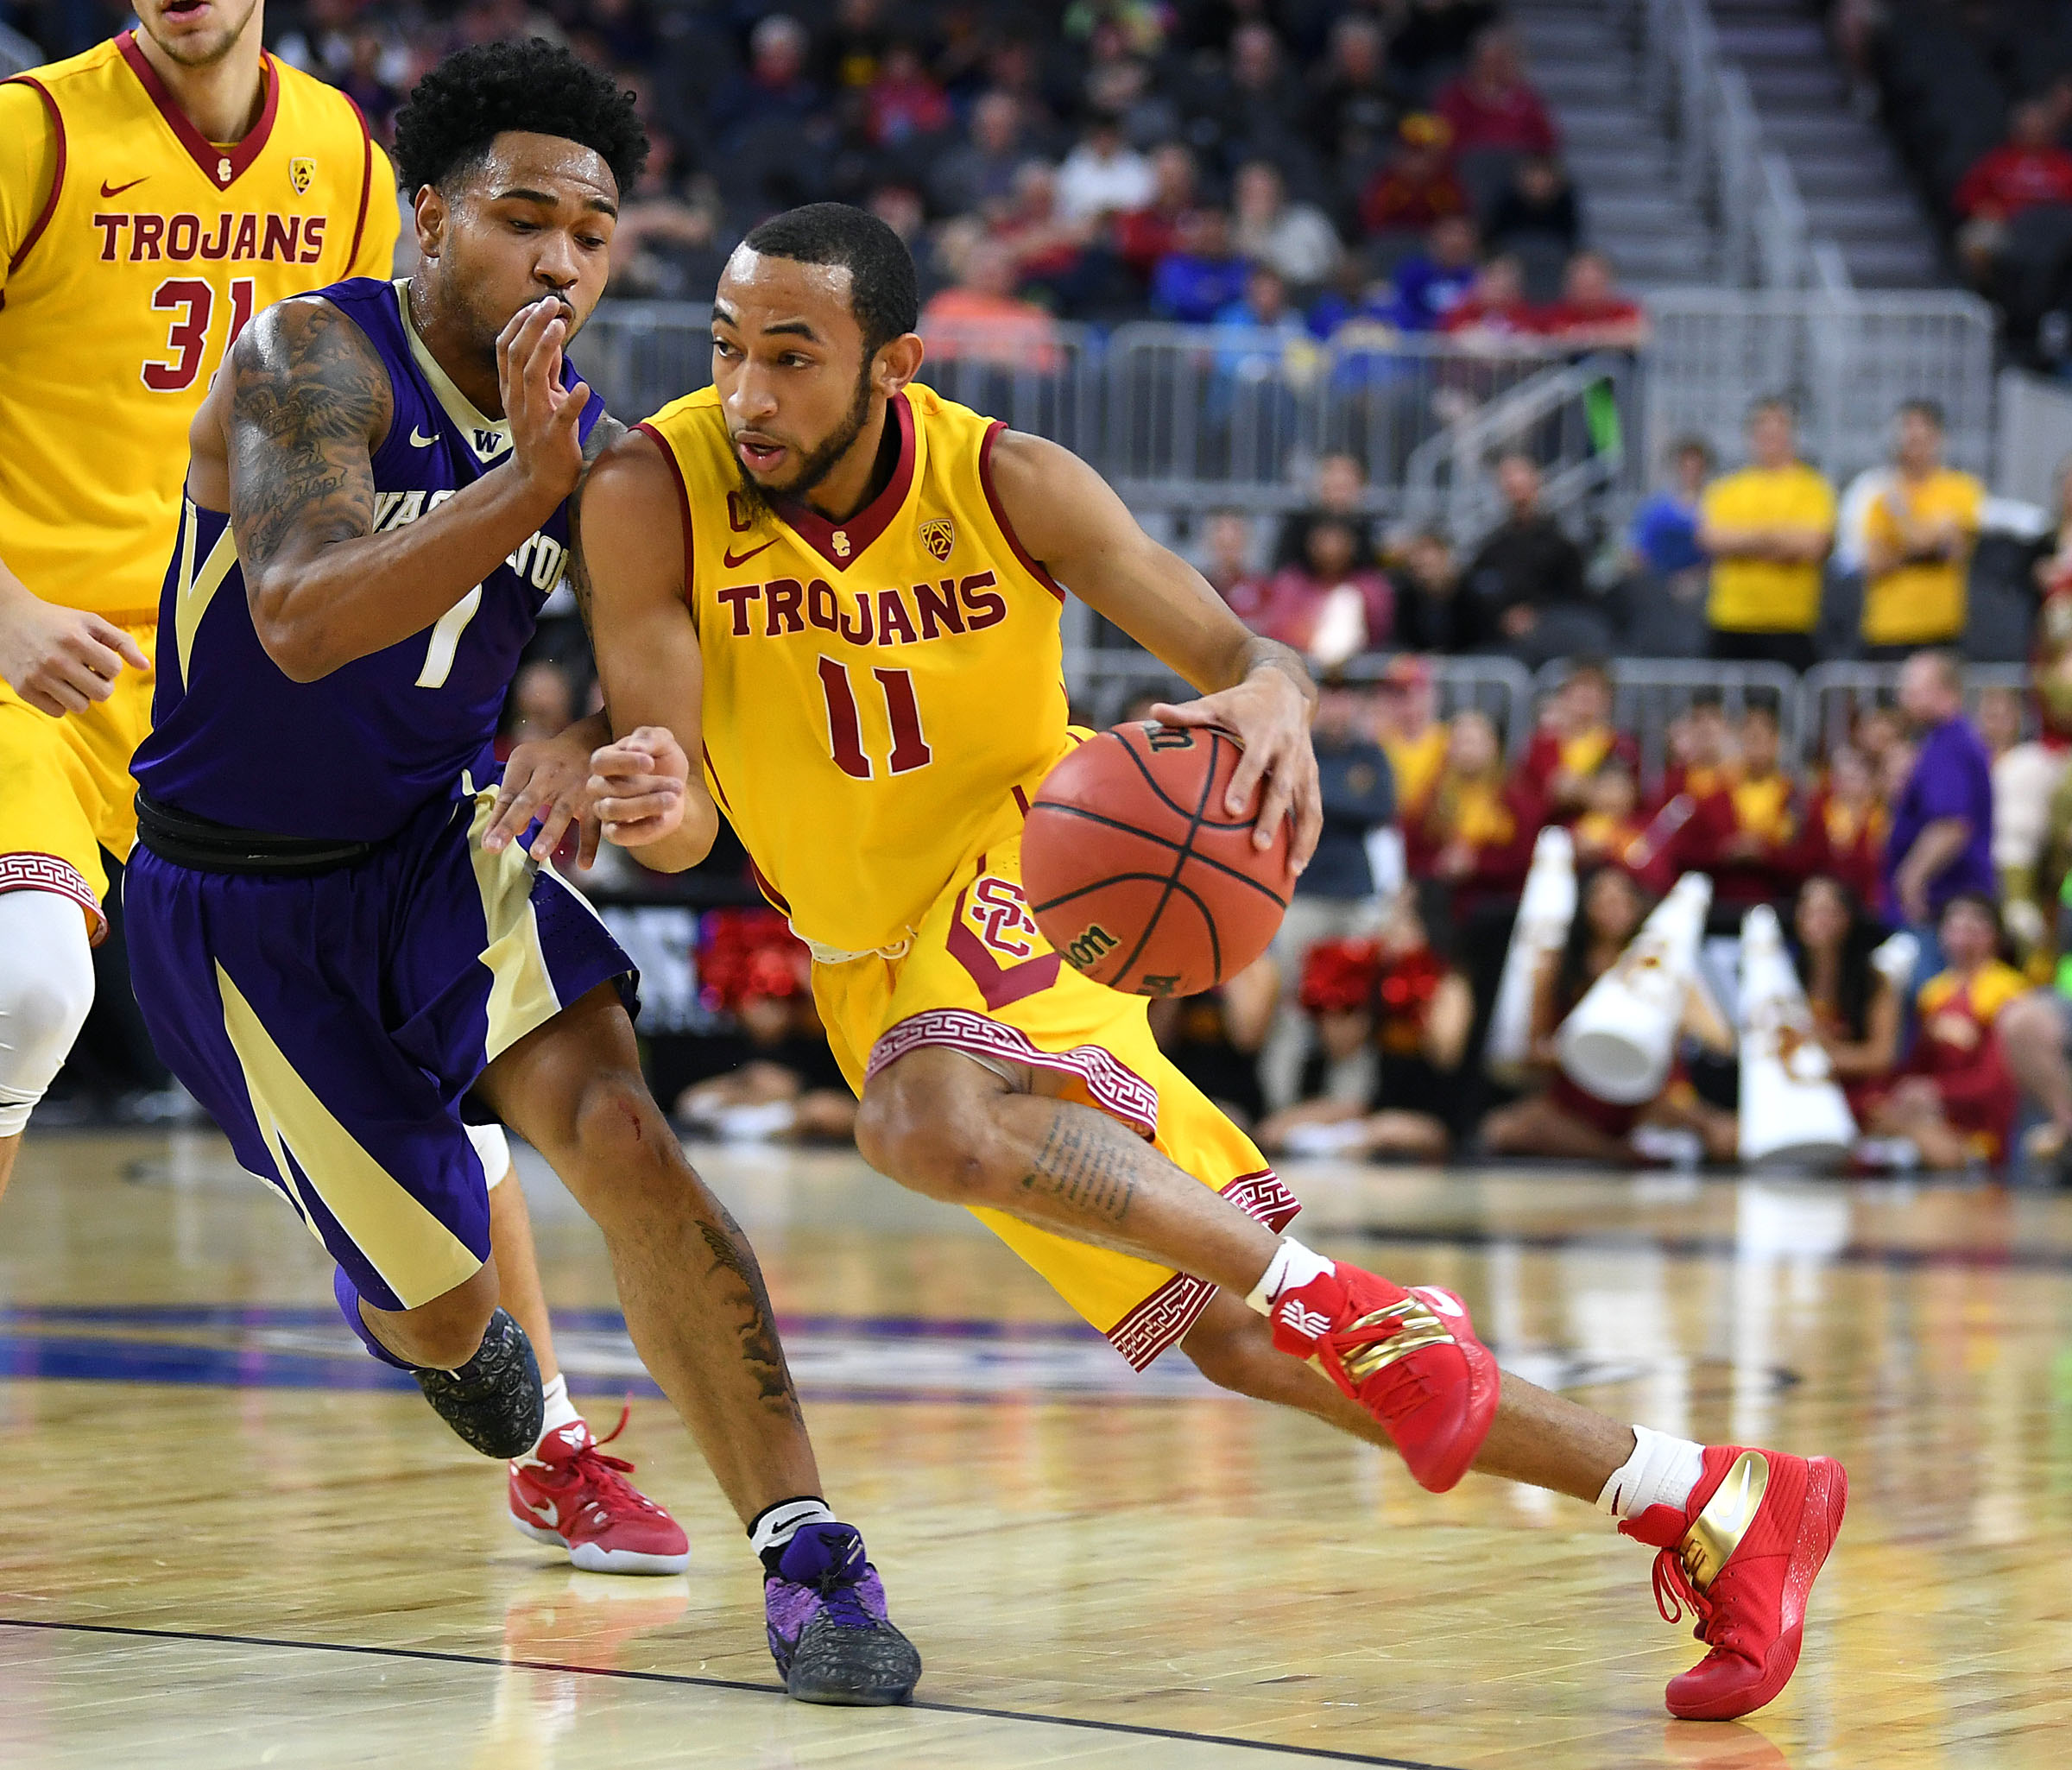 USC Basketball vs. Washington Trojans Advance In Pac12 Tournament